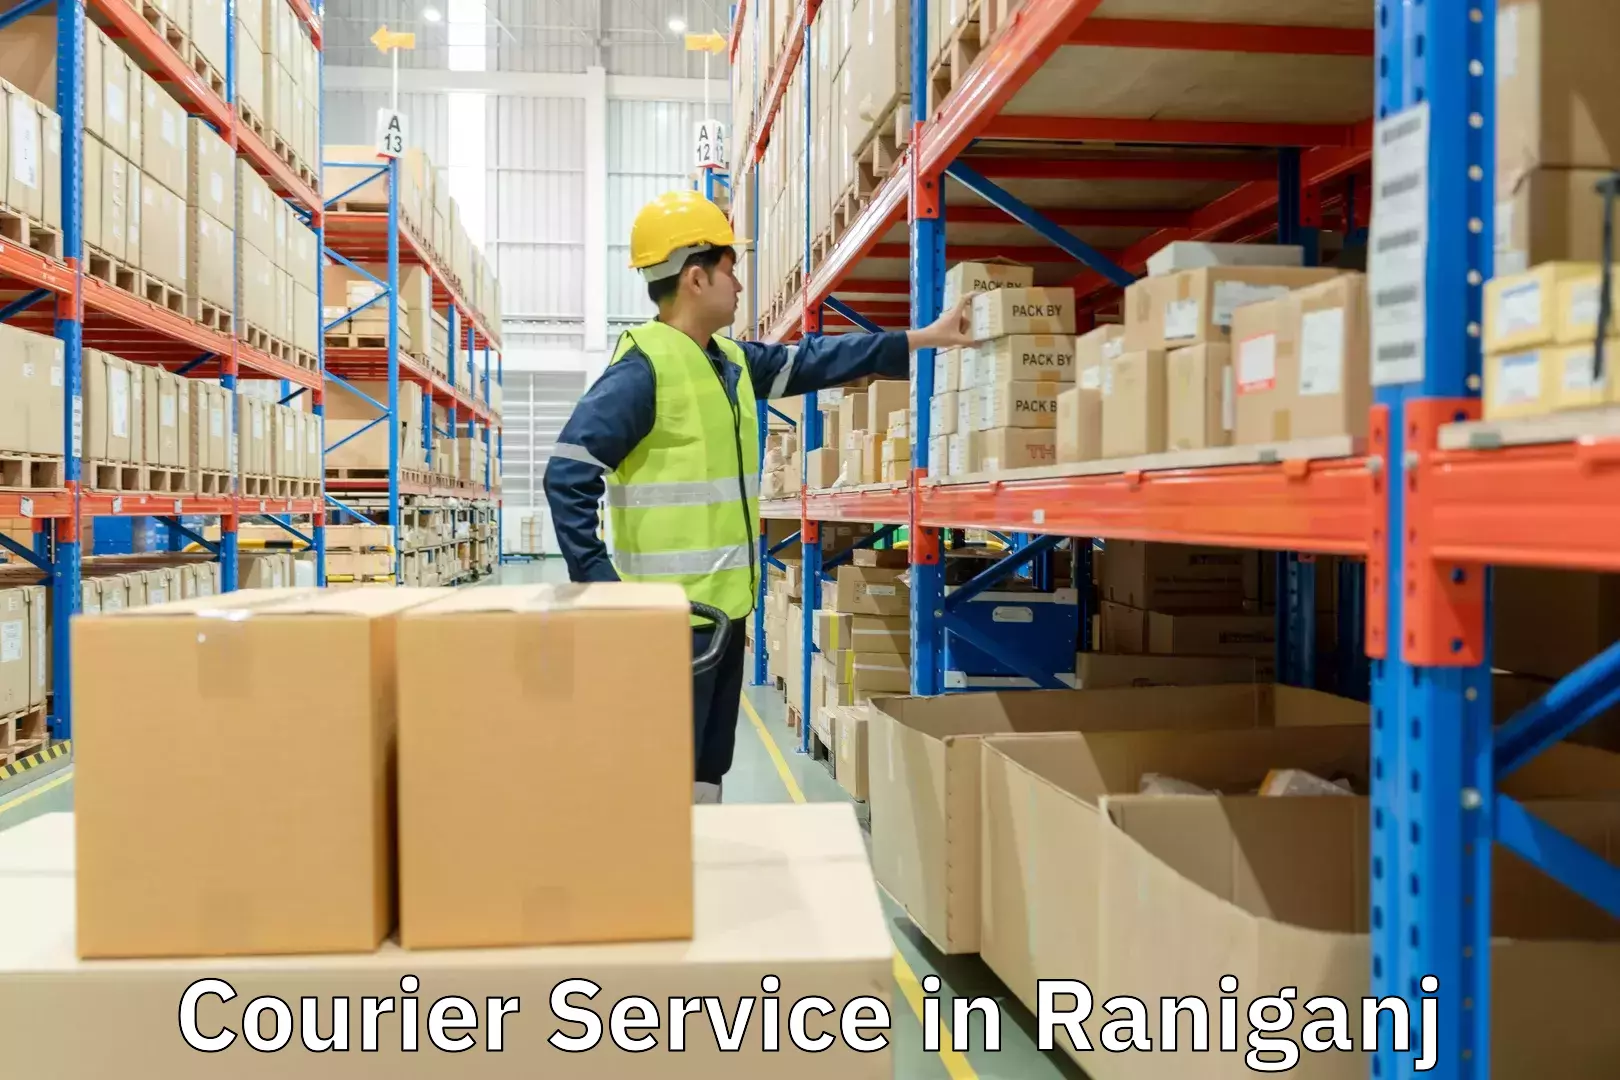 Express courier capabilities in Raniganj